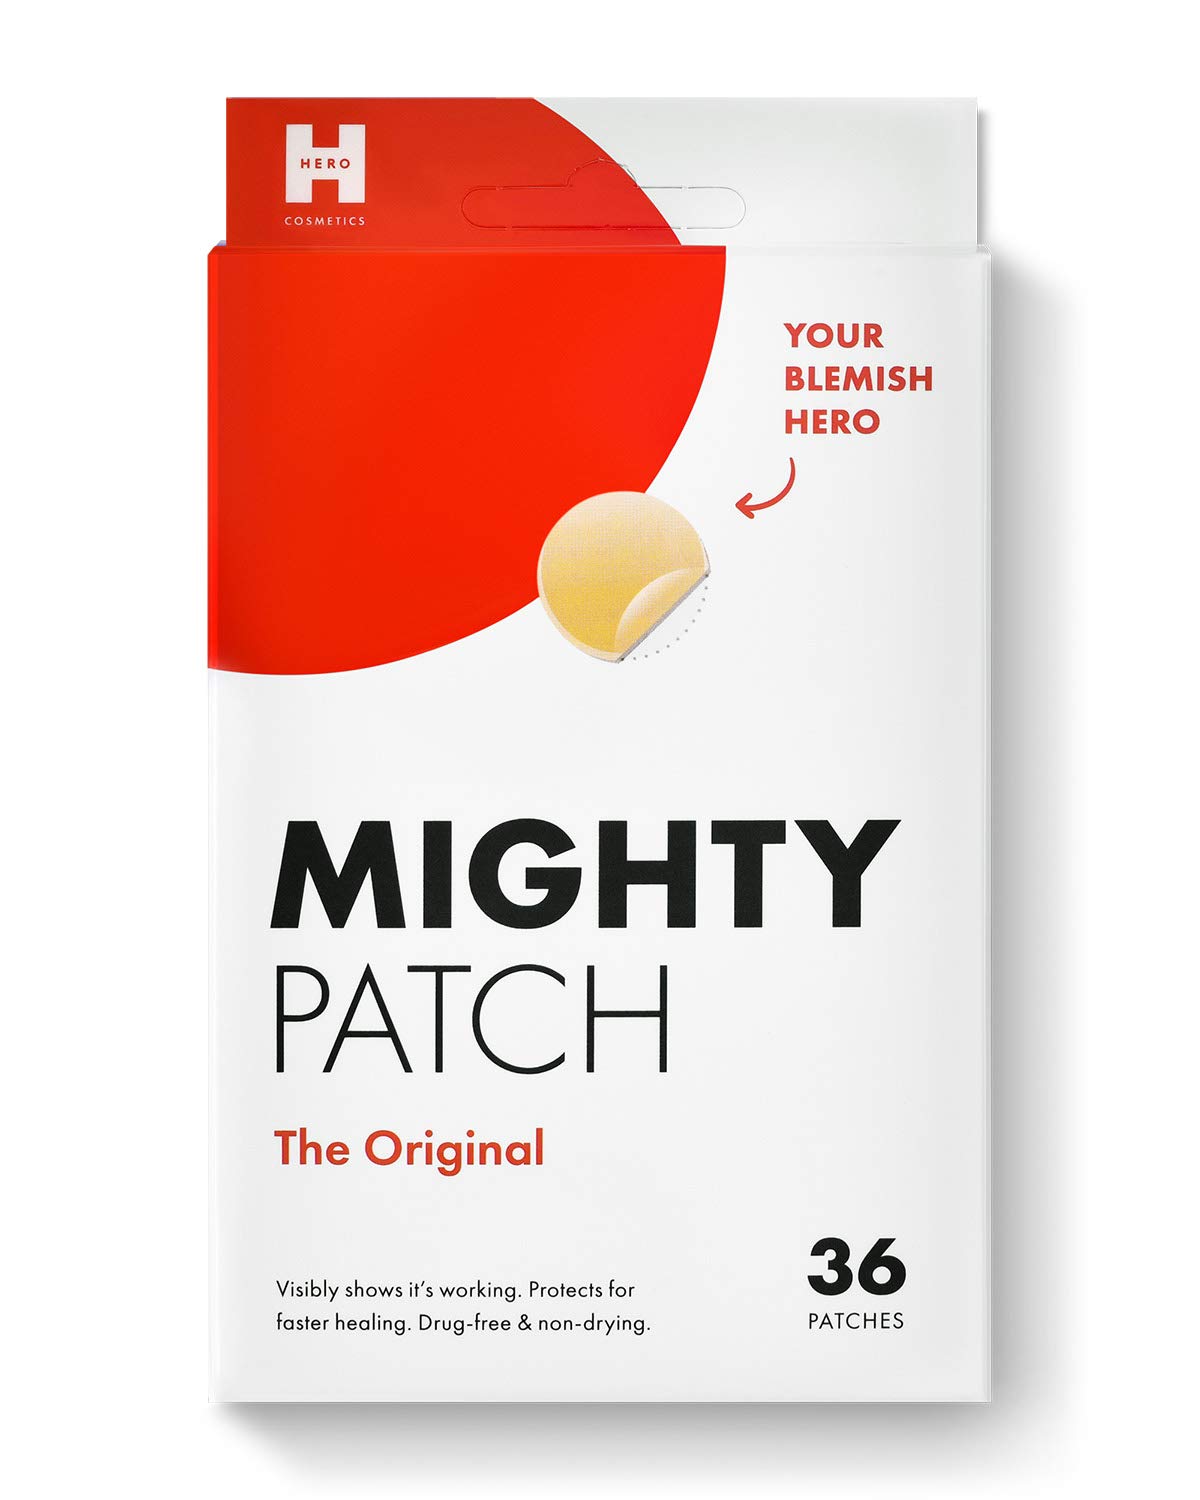 Mighty Patch - The Original, Best Korean Skincare